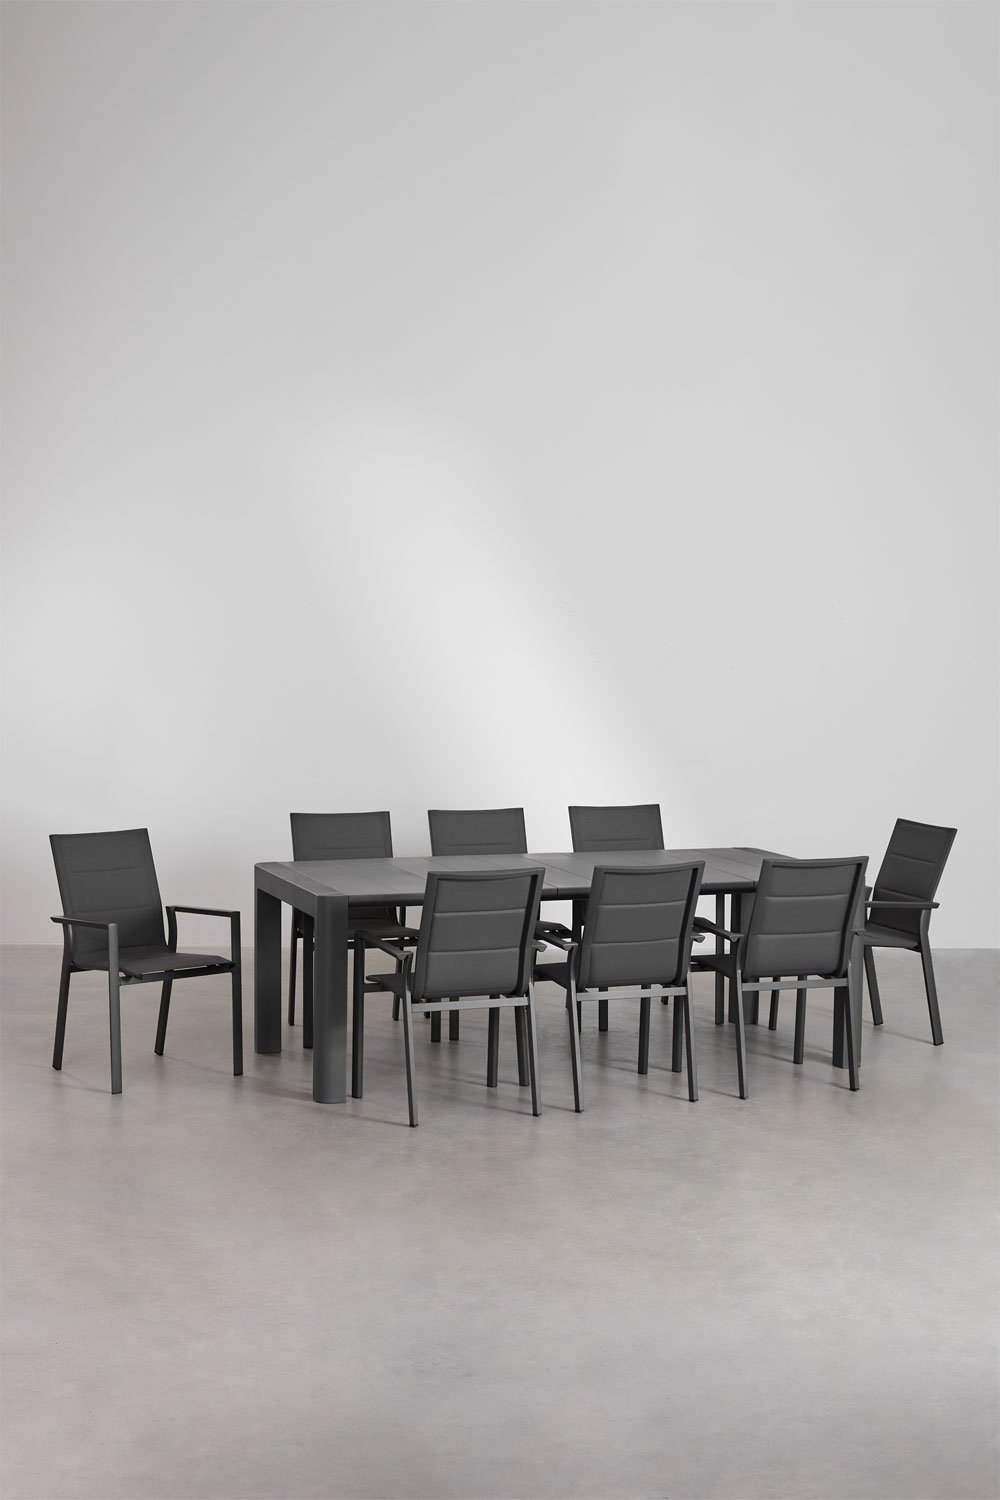 Arnadine rechthoekige tafelset (220x100 cm) en 8 Karena aluminium stapelbare tuinstoelen, galerij beeld 1